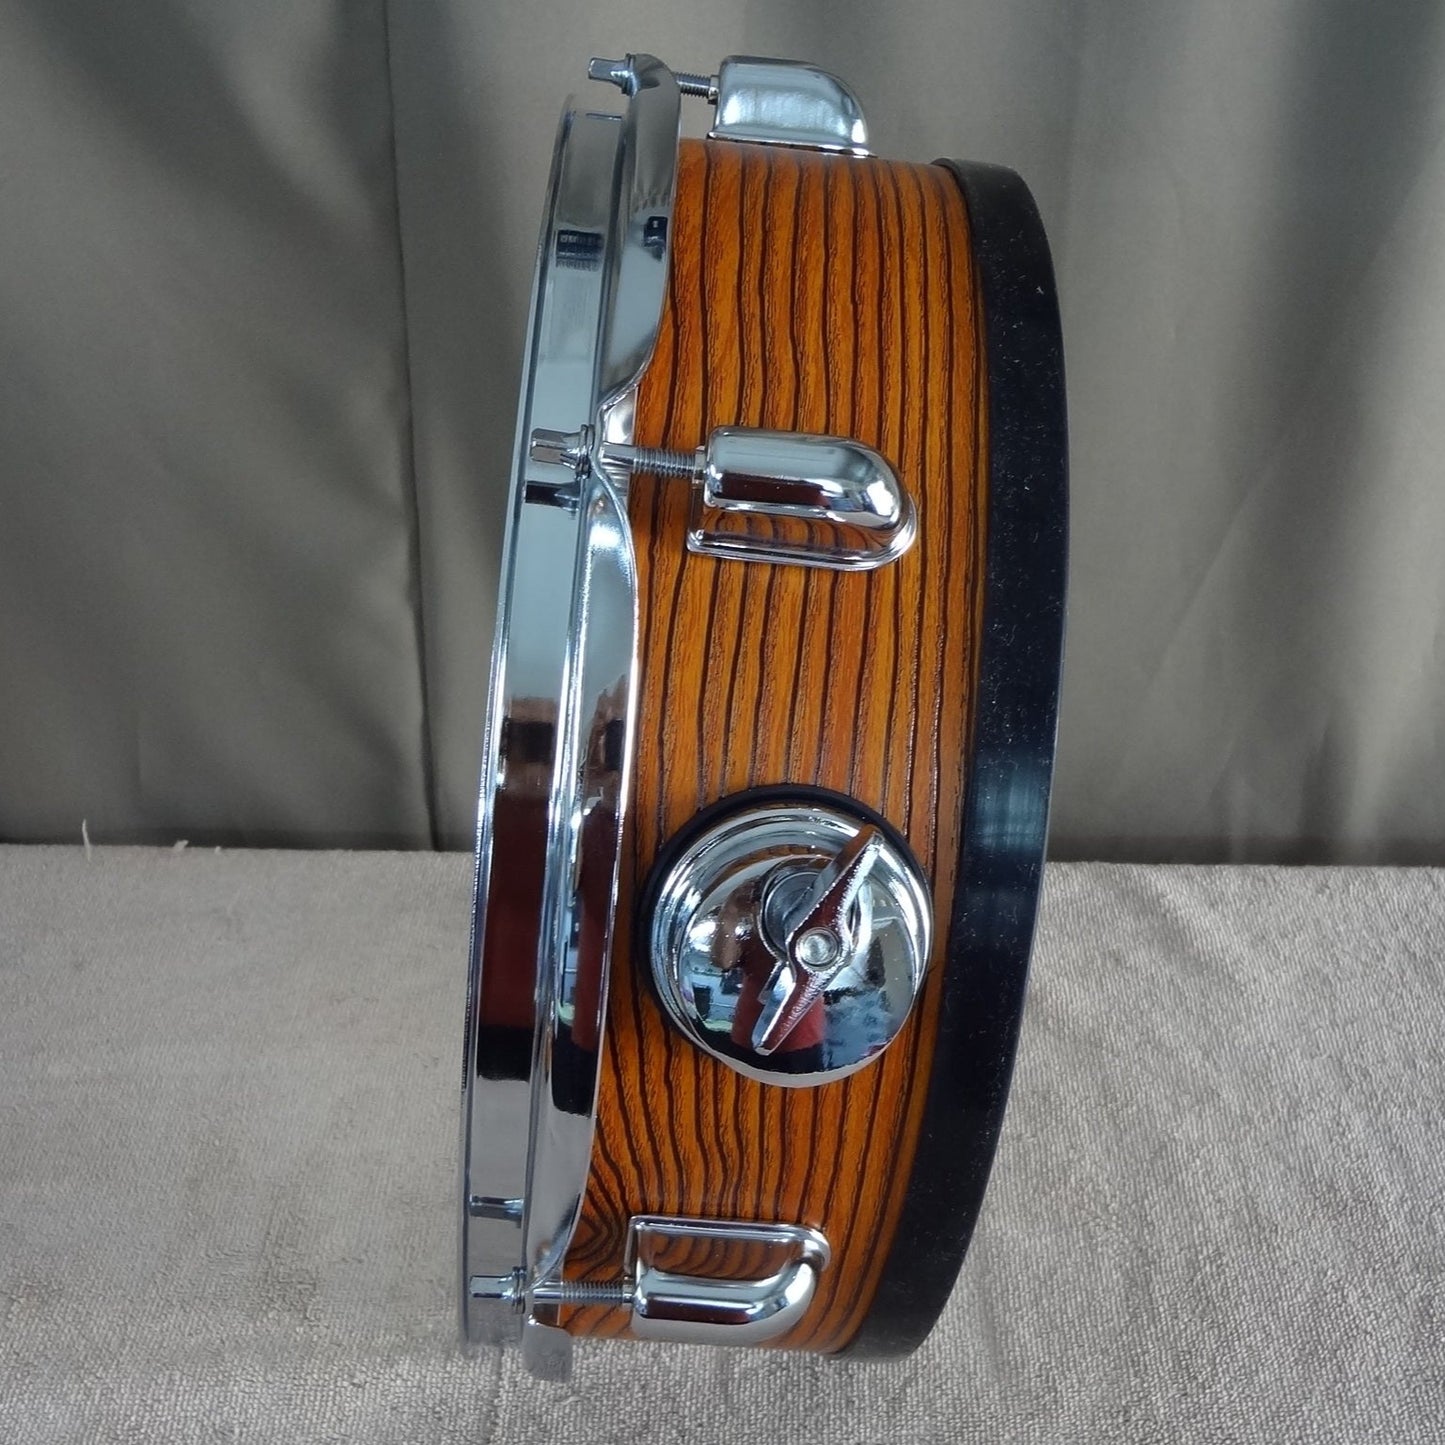 New 13 Inch Custom Electronic Snare Drum - Woodgrain